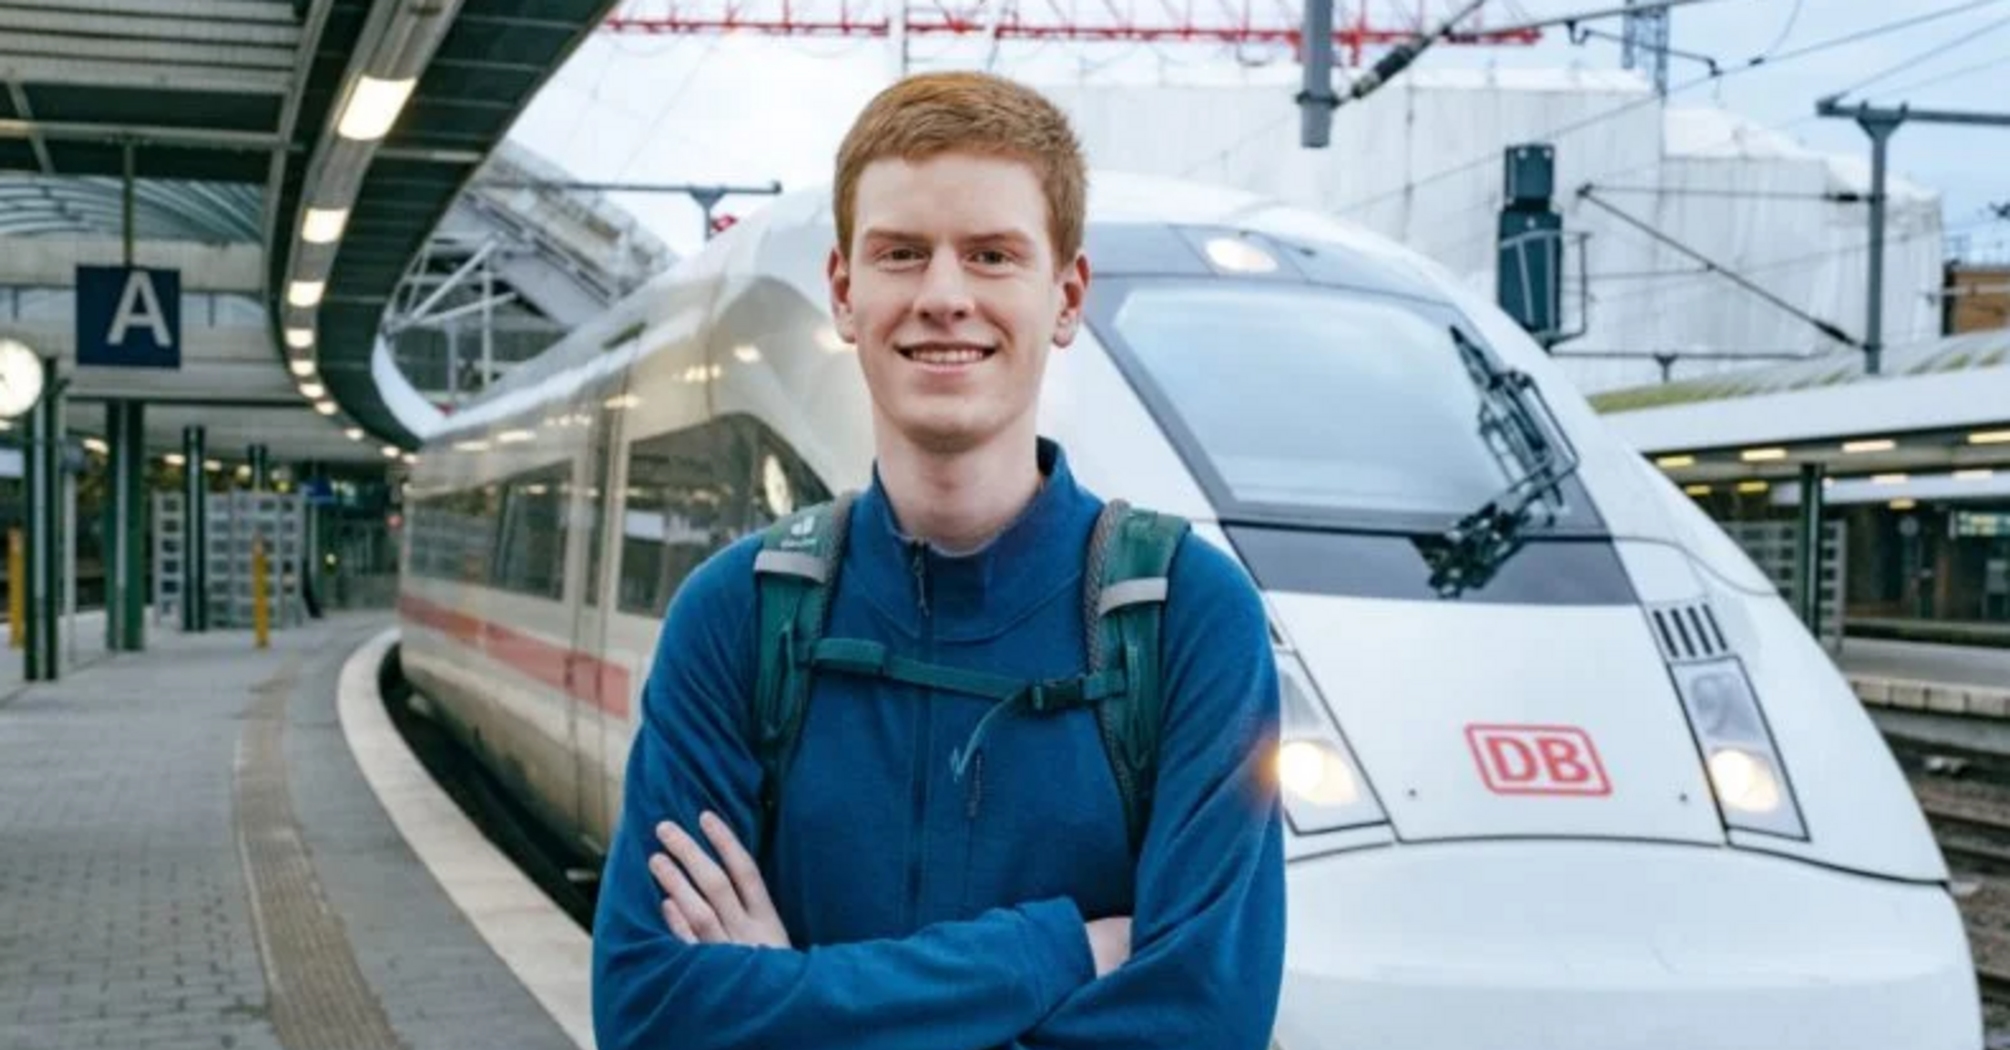 In Germany, a 17-year-old boy lives on Deutsche Bahn trains